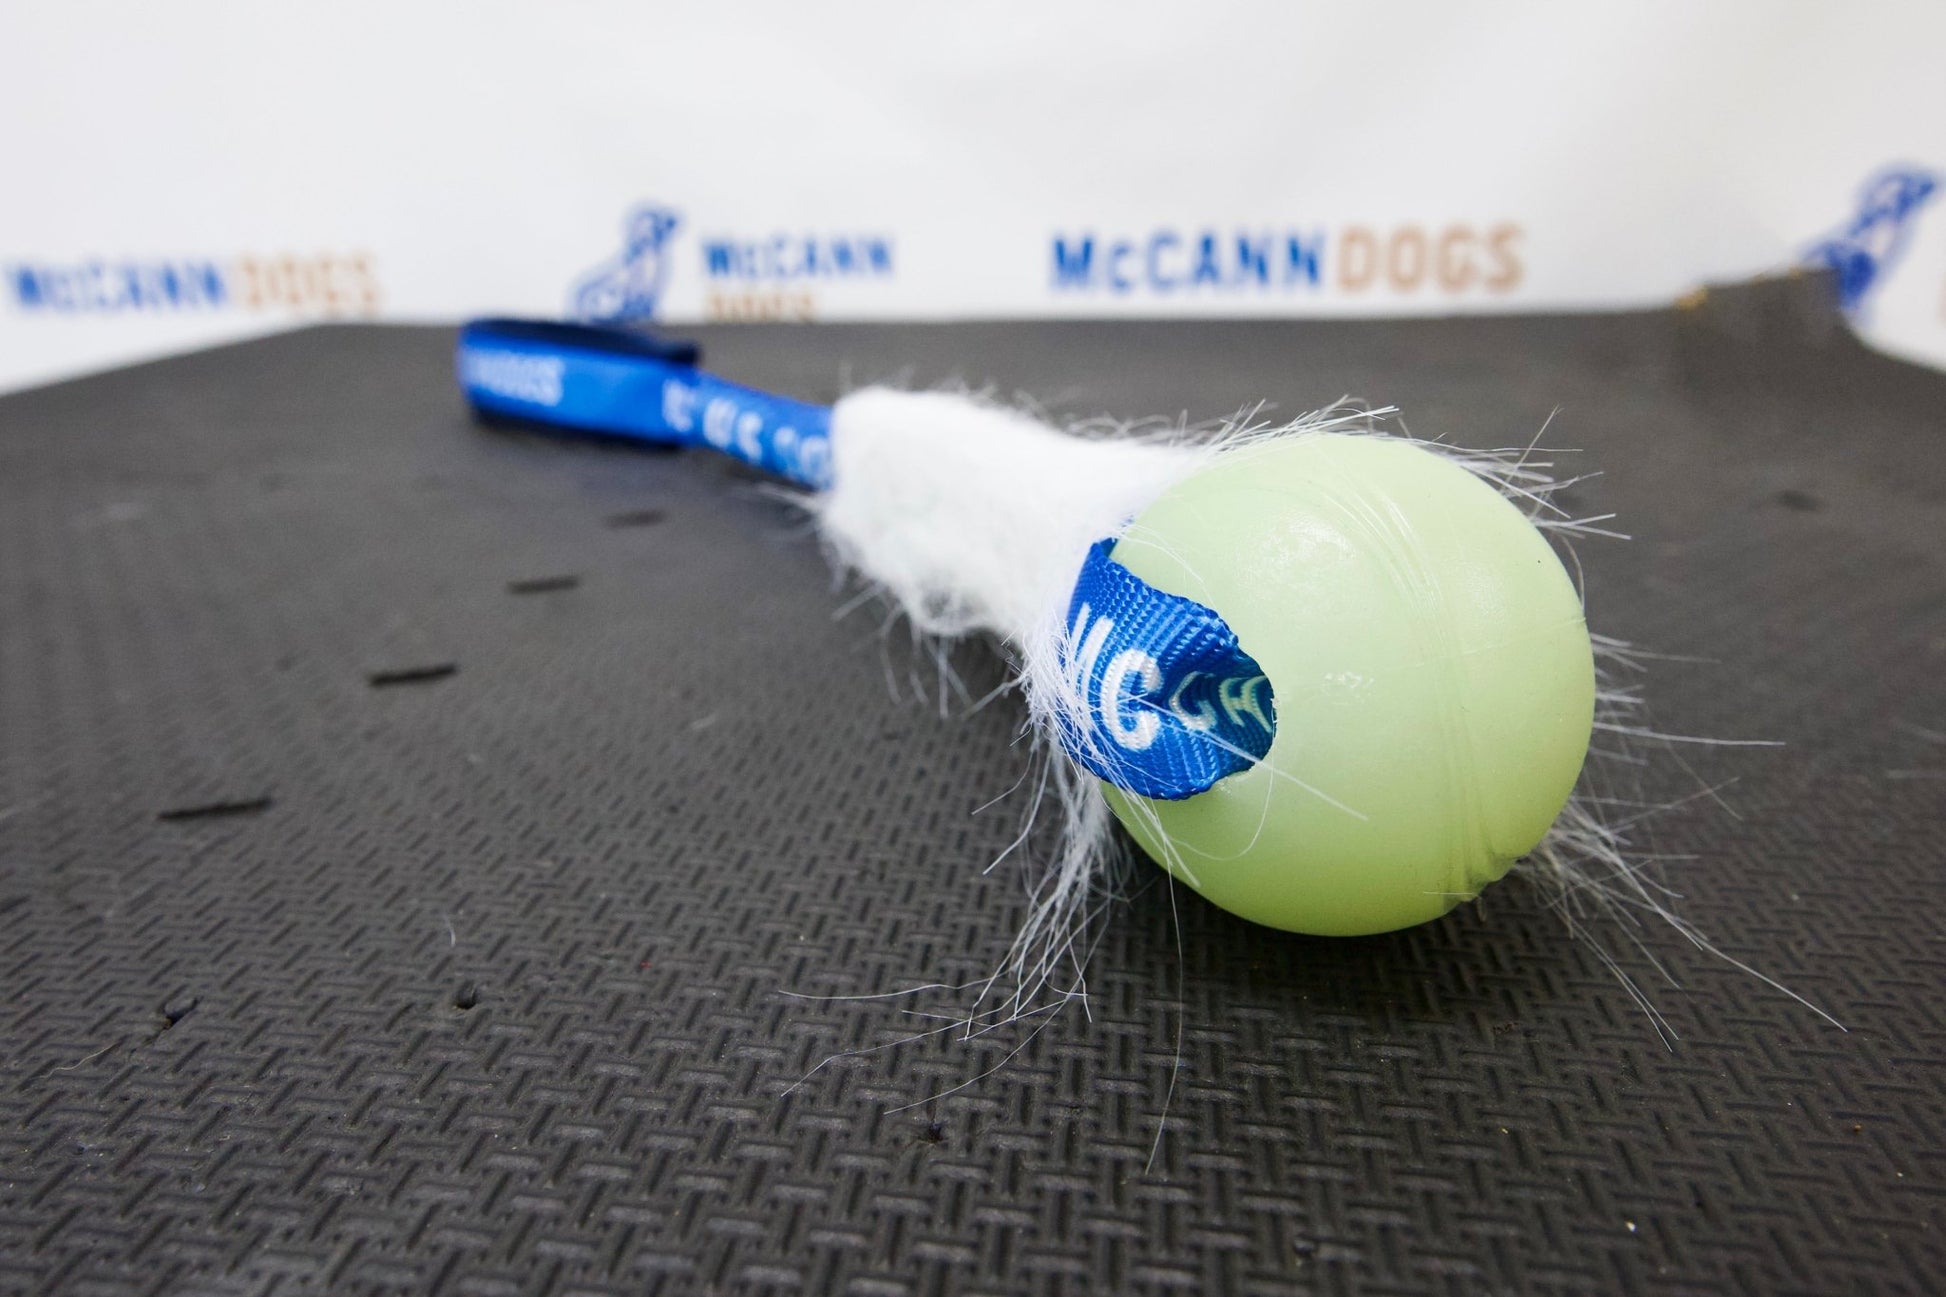 McCann Dogs Fuzzy Ball Tug Toy - McCann Professional Dog Trainers